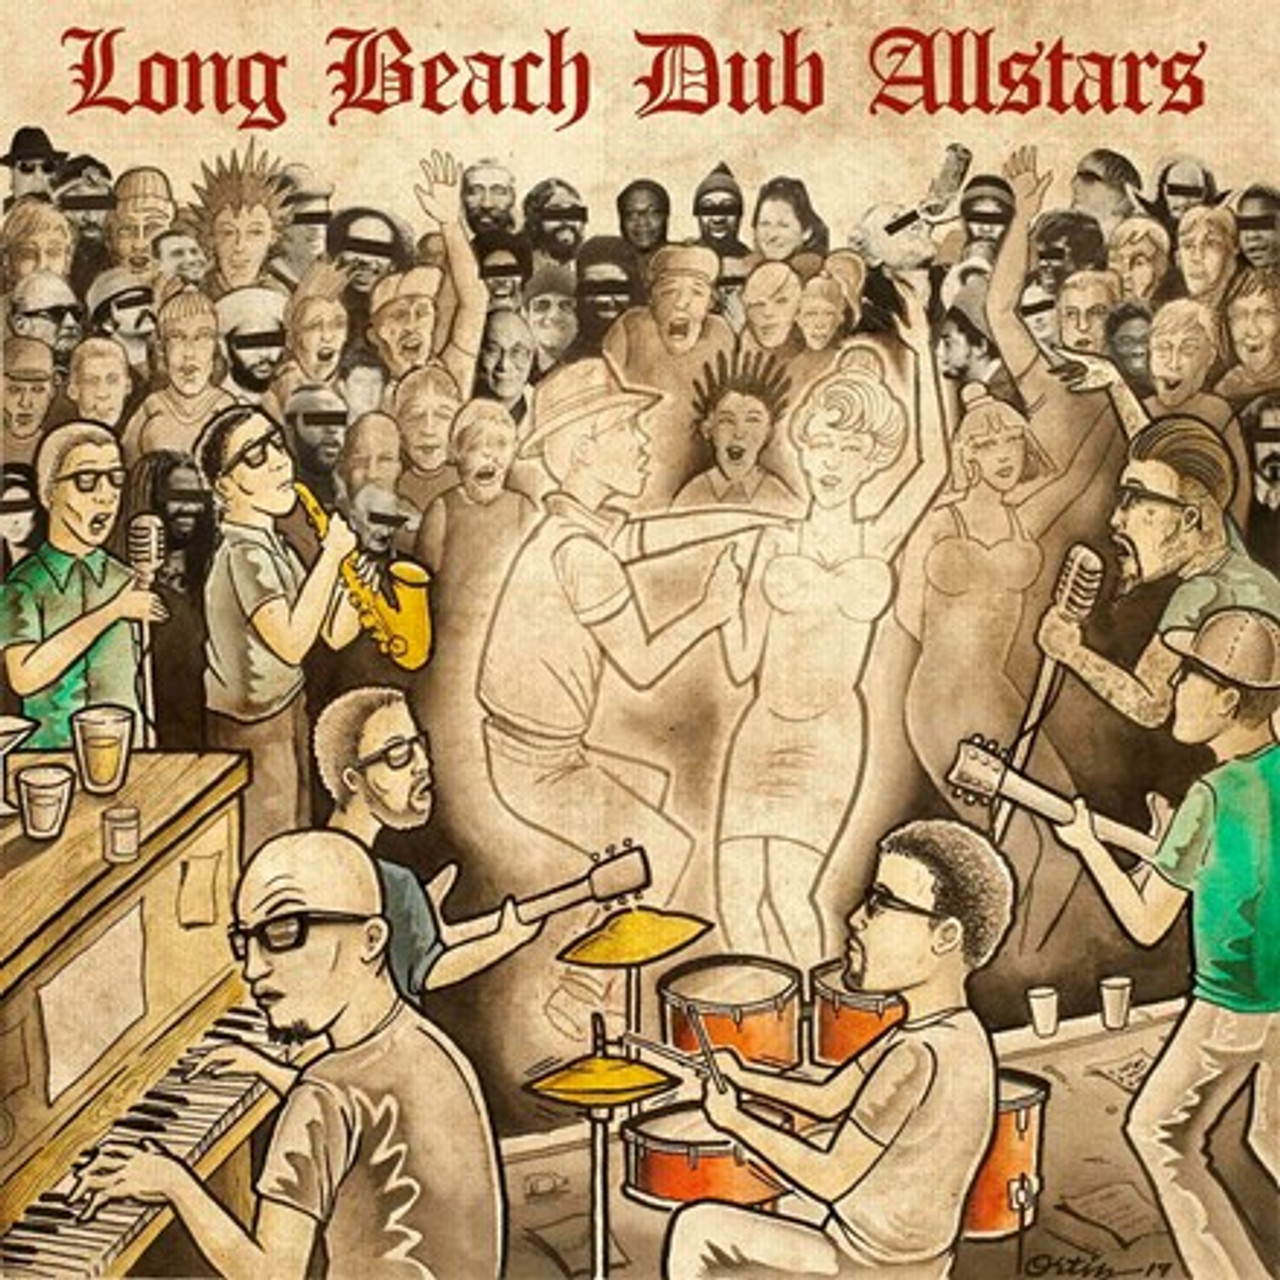 SALEお買い得LONG BEACH DUB ALLSTARS 2LP レコード 洋楽